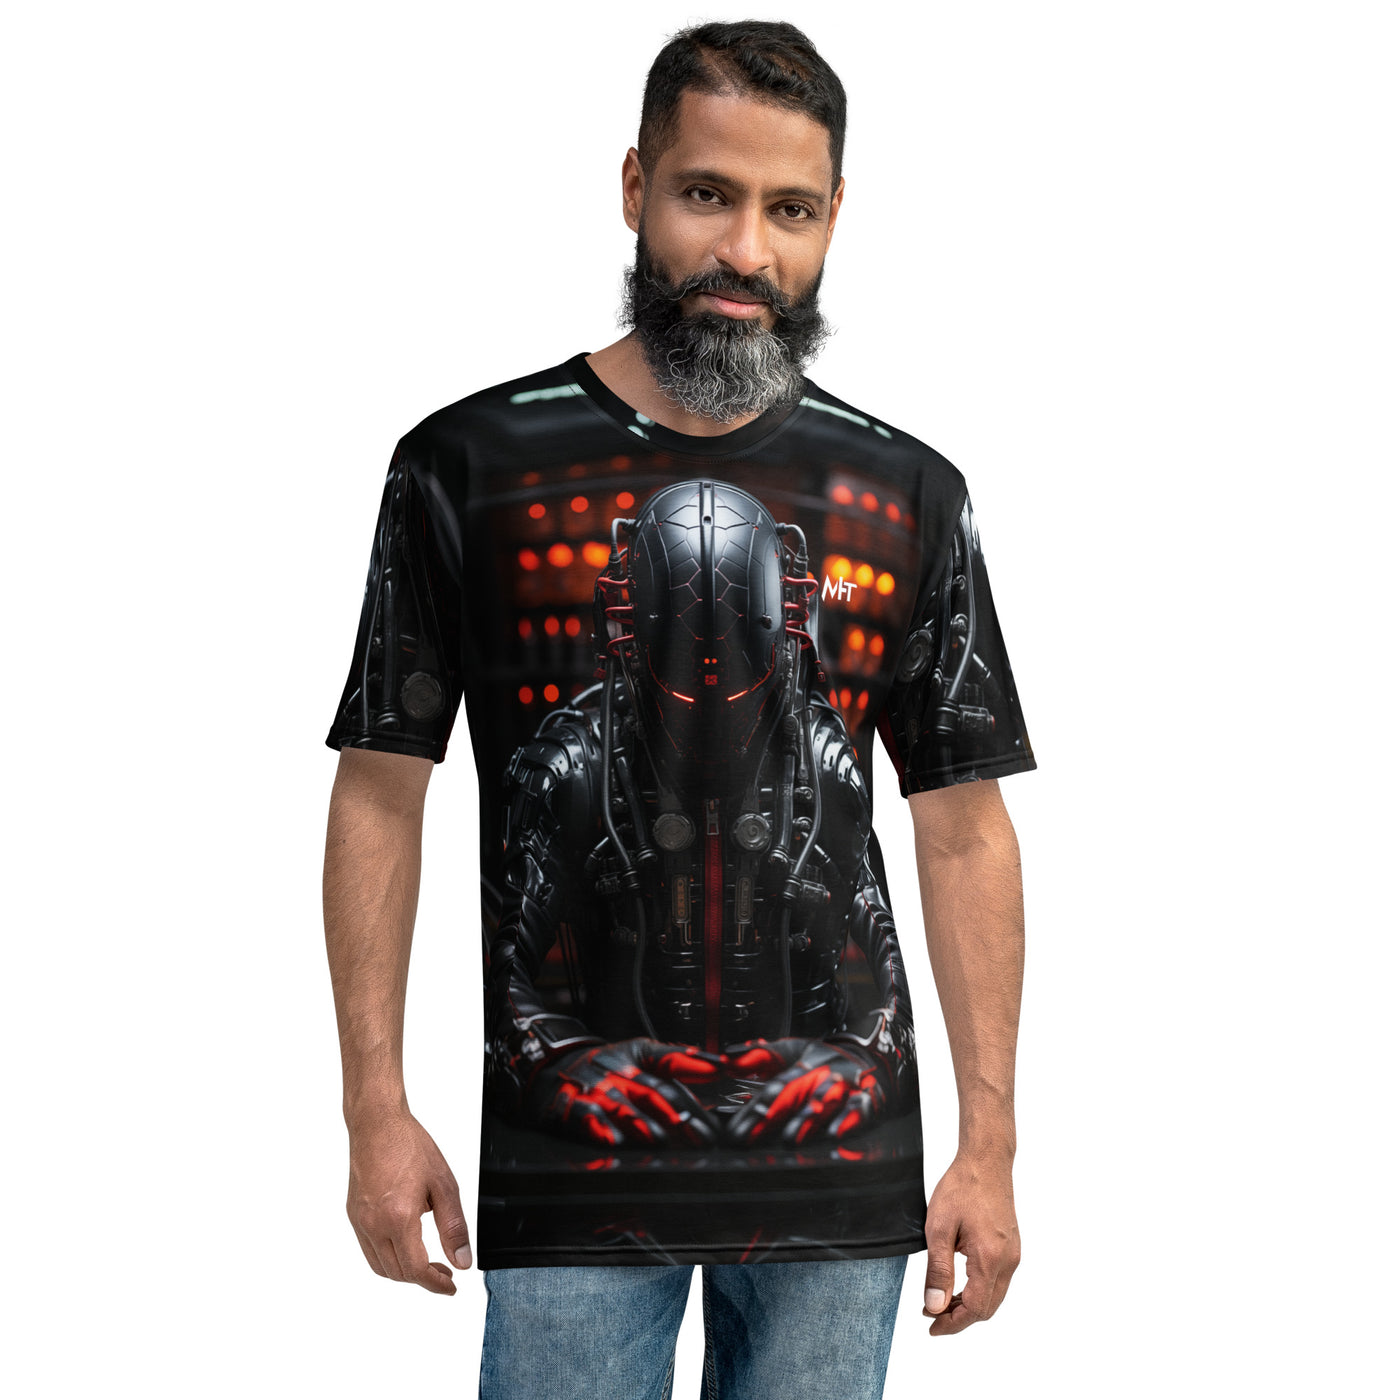 CyberArms Warrior v35 - Men's t-shirt